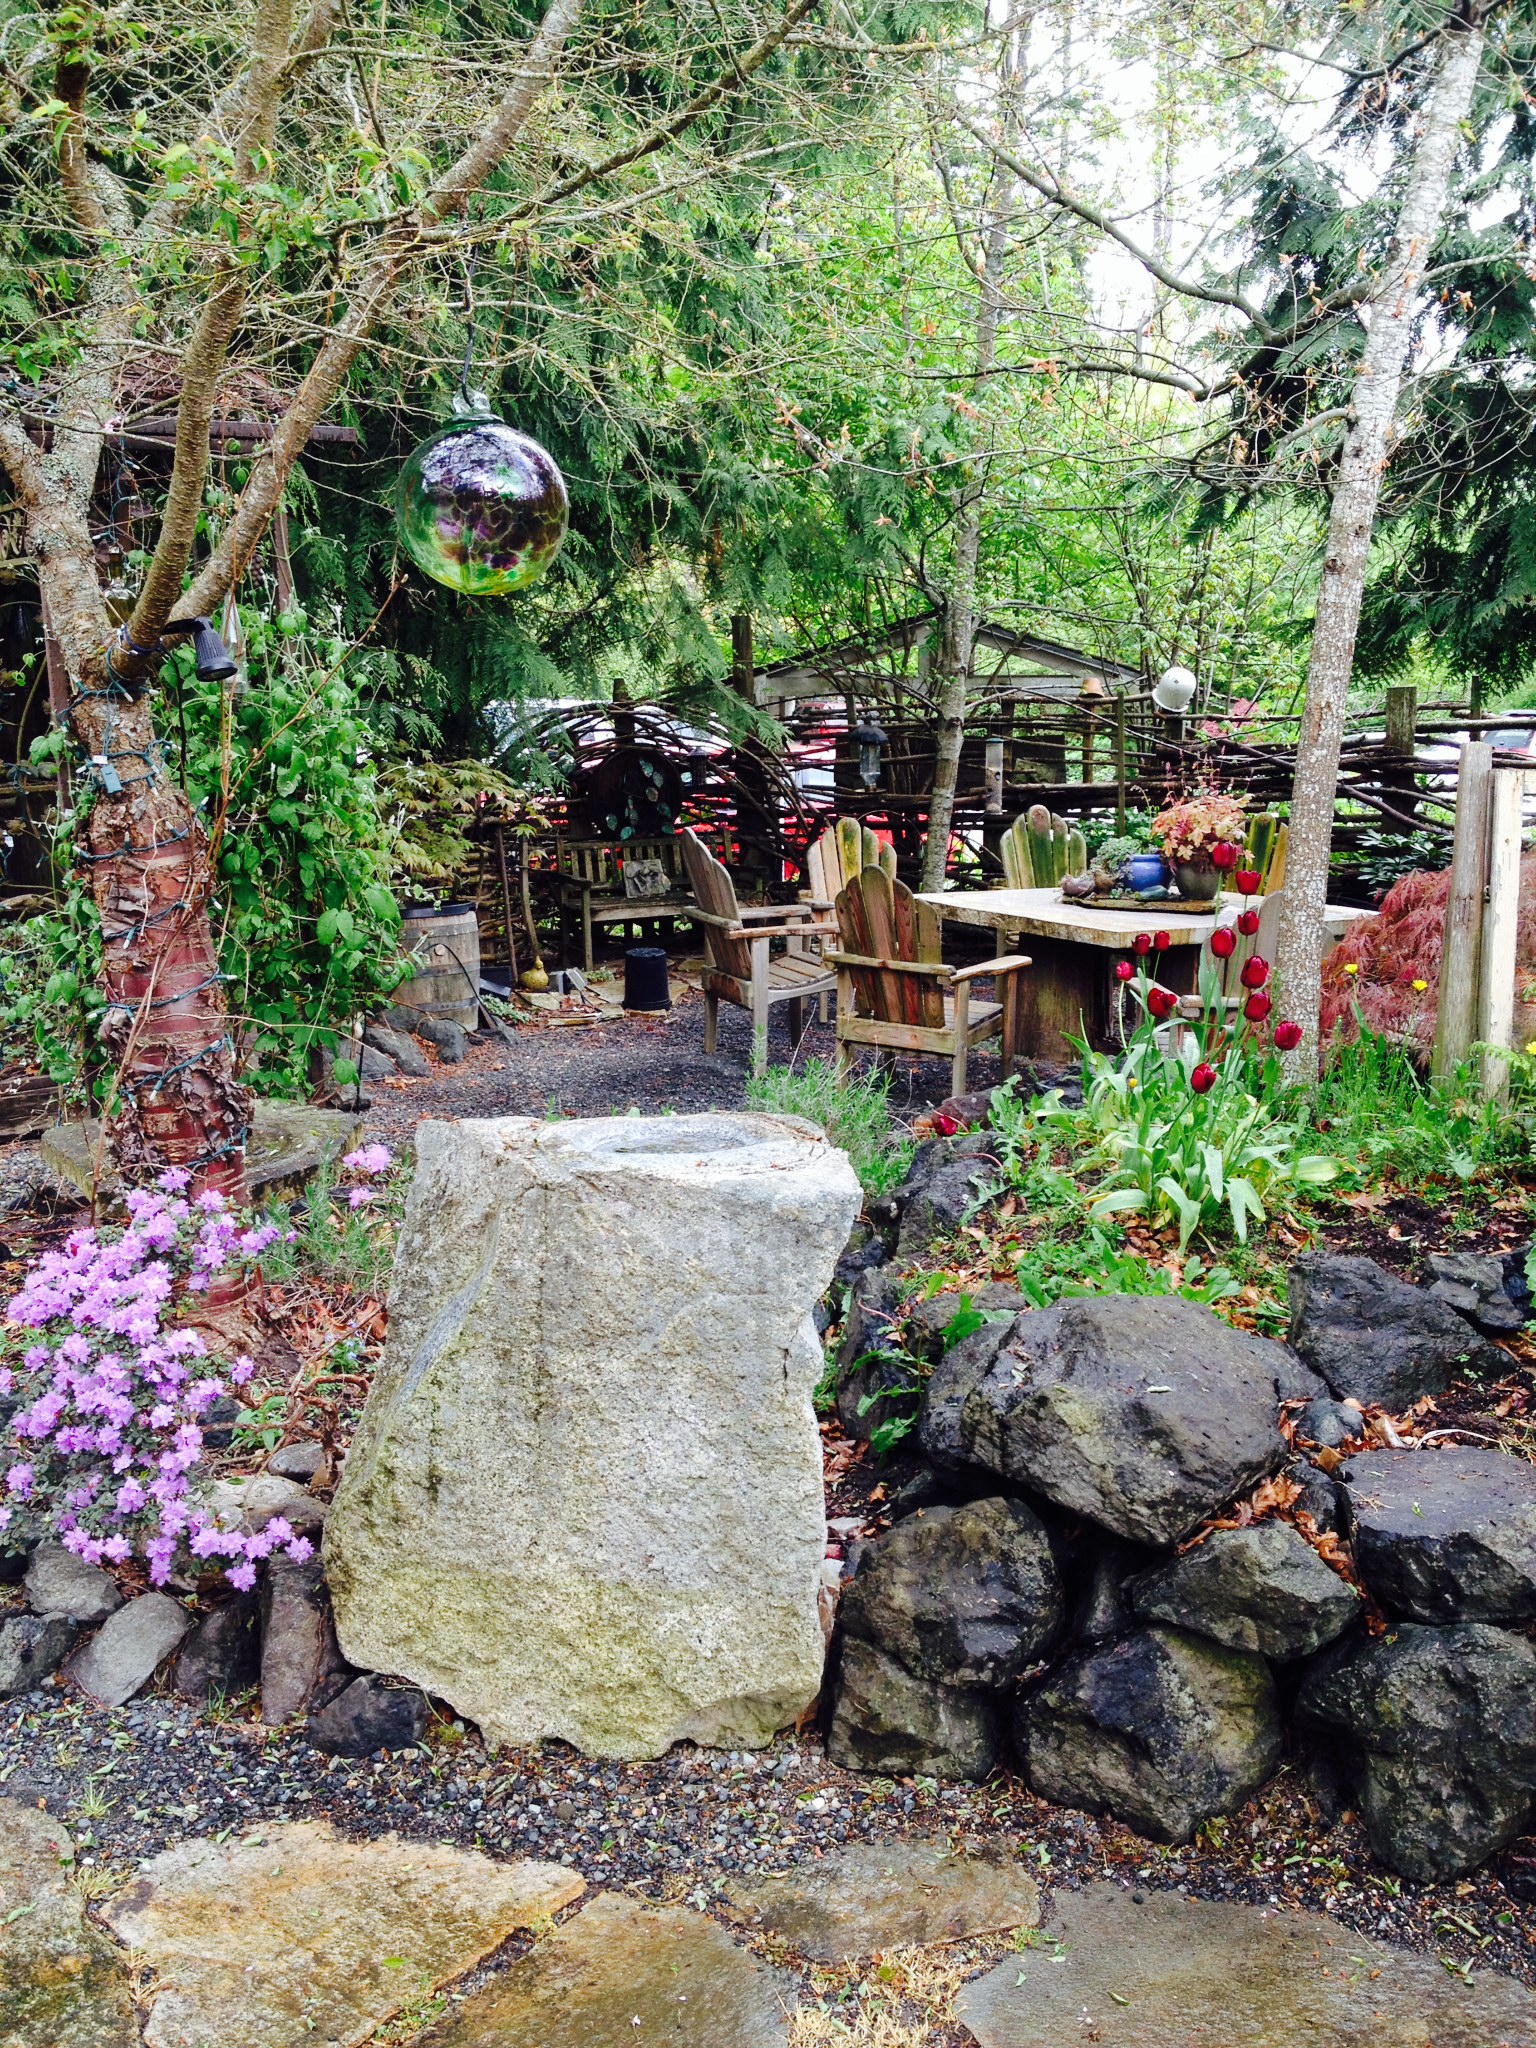 camaraderie wine cellars yard. backyard diy ideas for garden. flowers, seating area, table | bexbernard.com